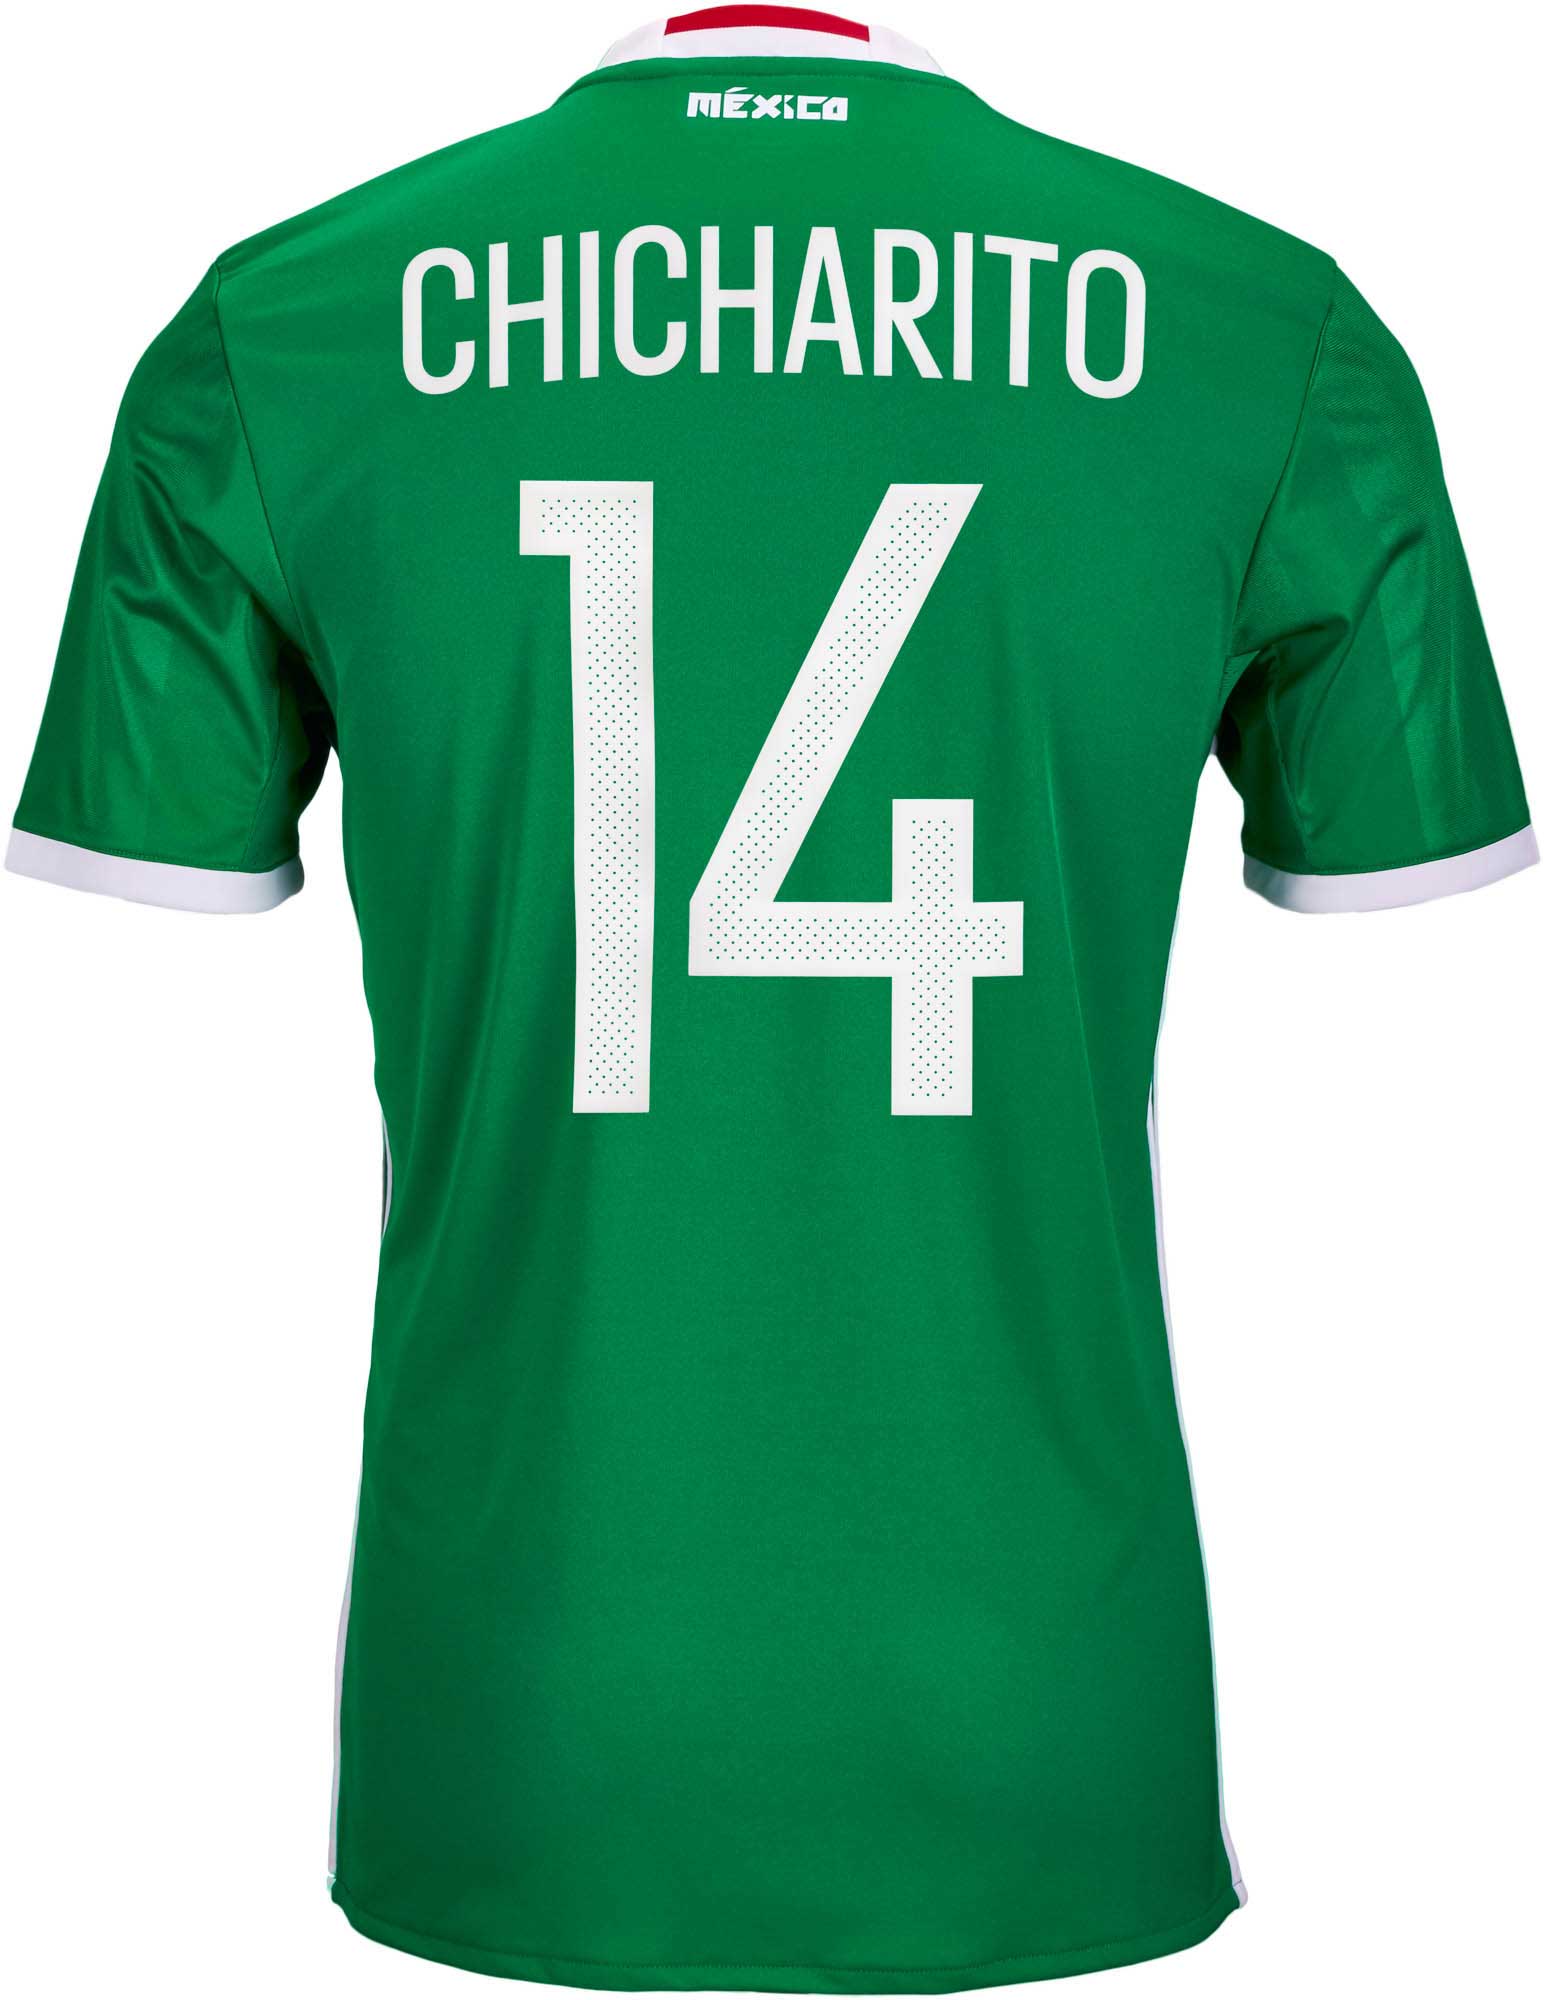 adidas Chicharito Mexico Home Jersey - 2016 Mexico Jerseys